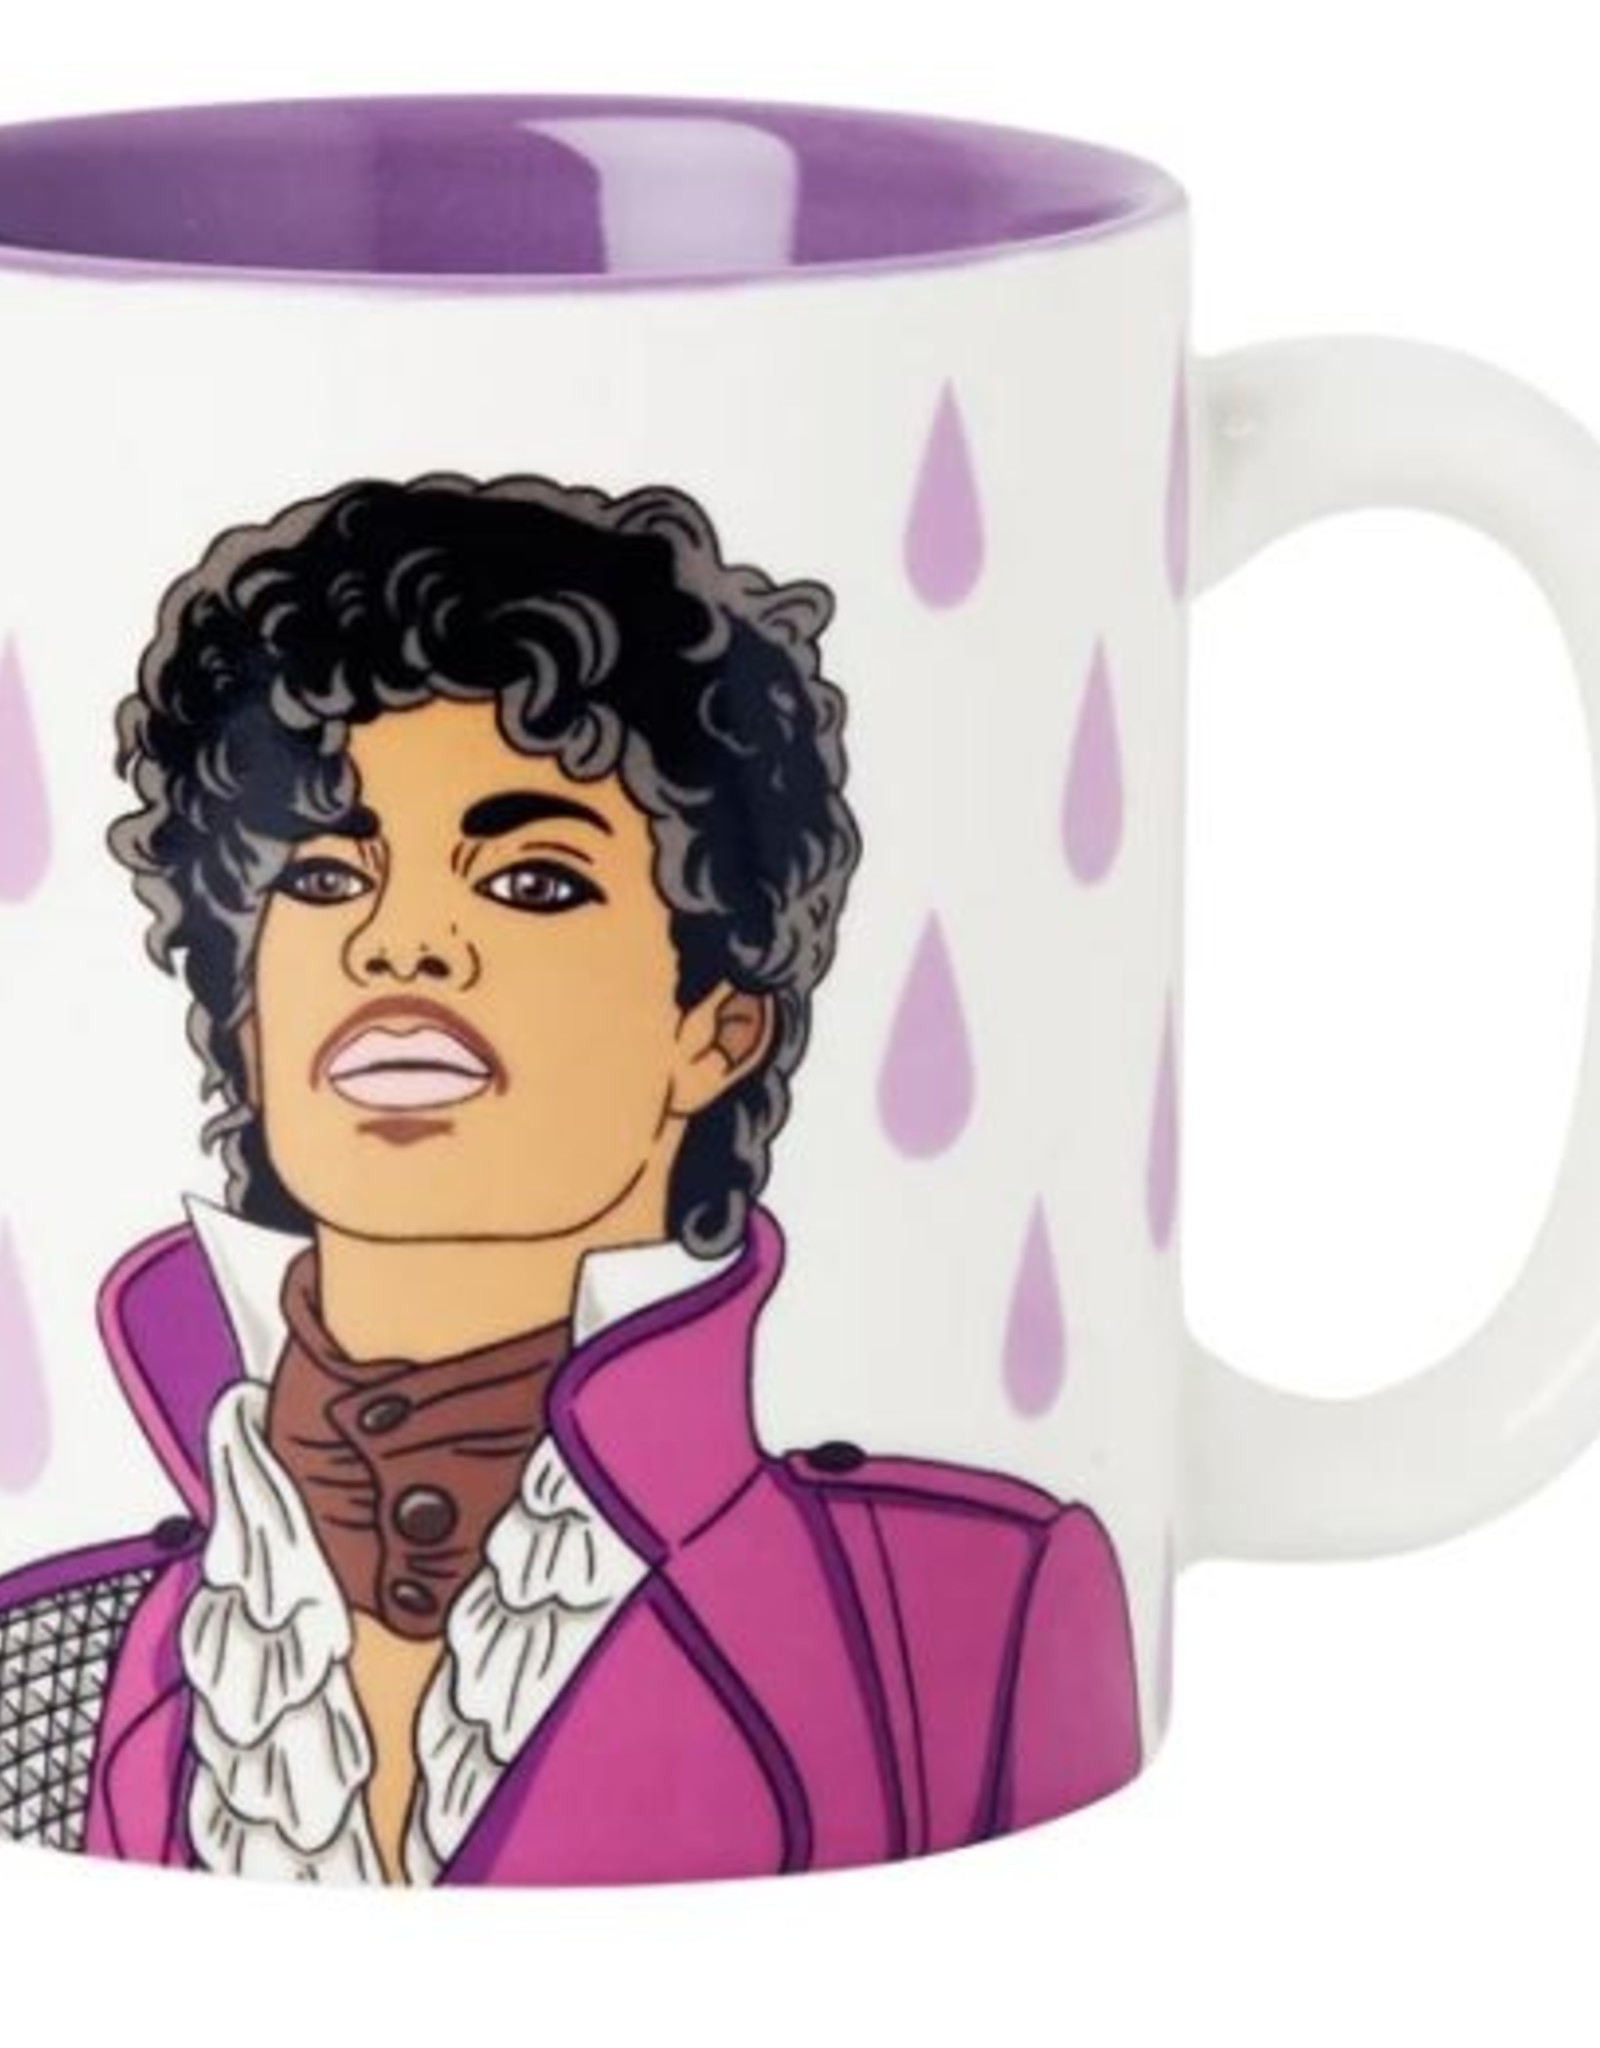 The Found Mug: Prince